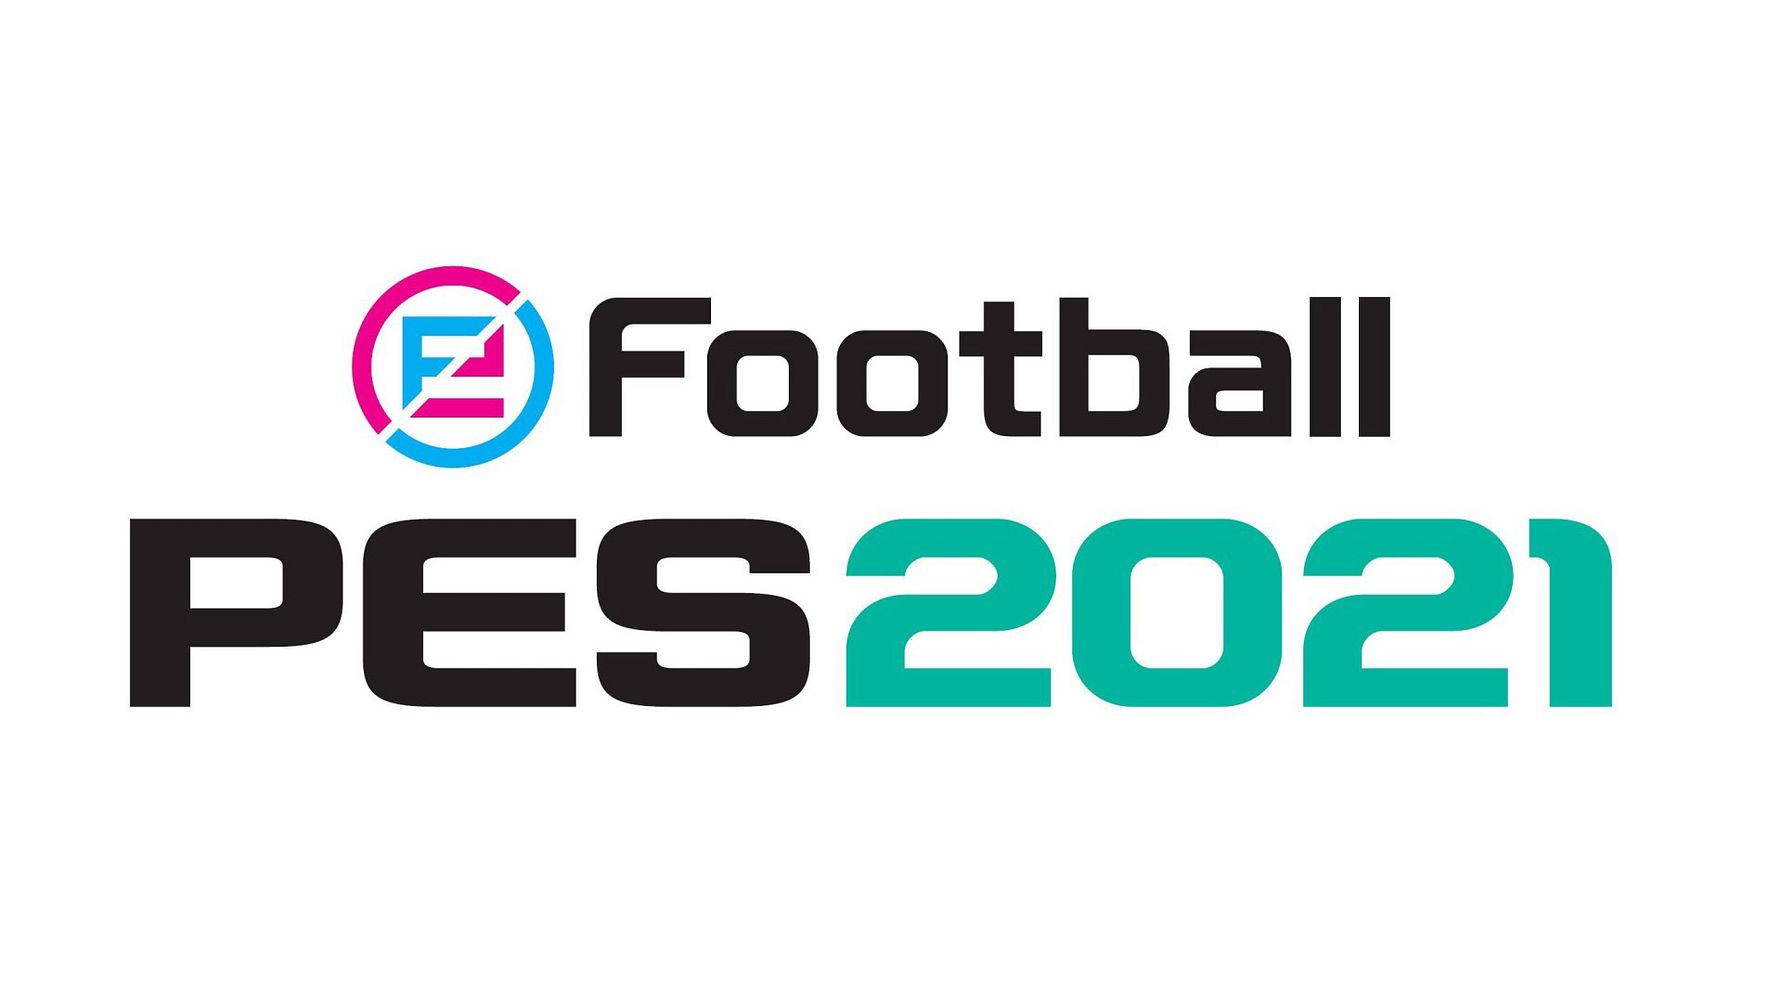 eFootball Season 0 Content Revealed; Mobile Downloads Hit 650 Million